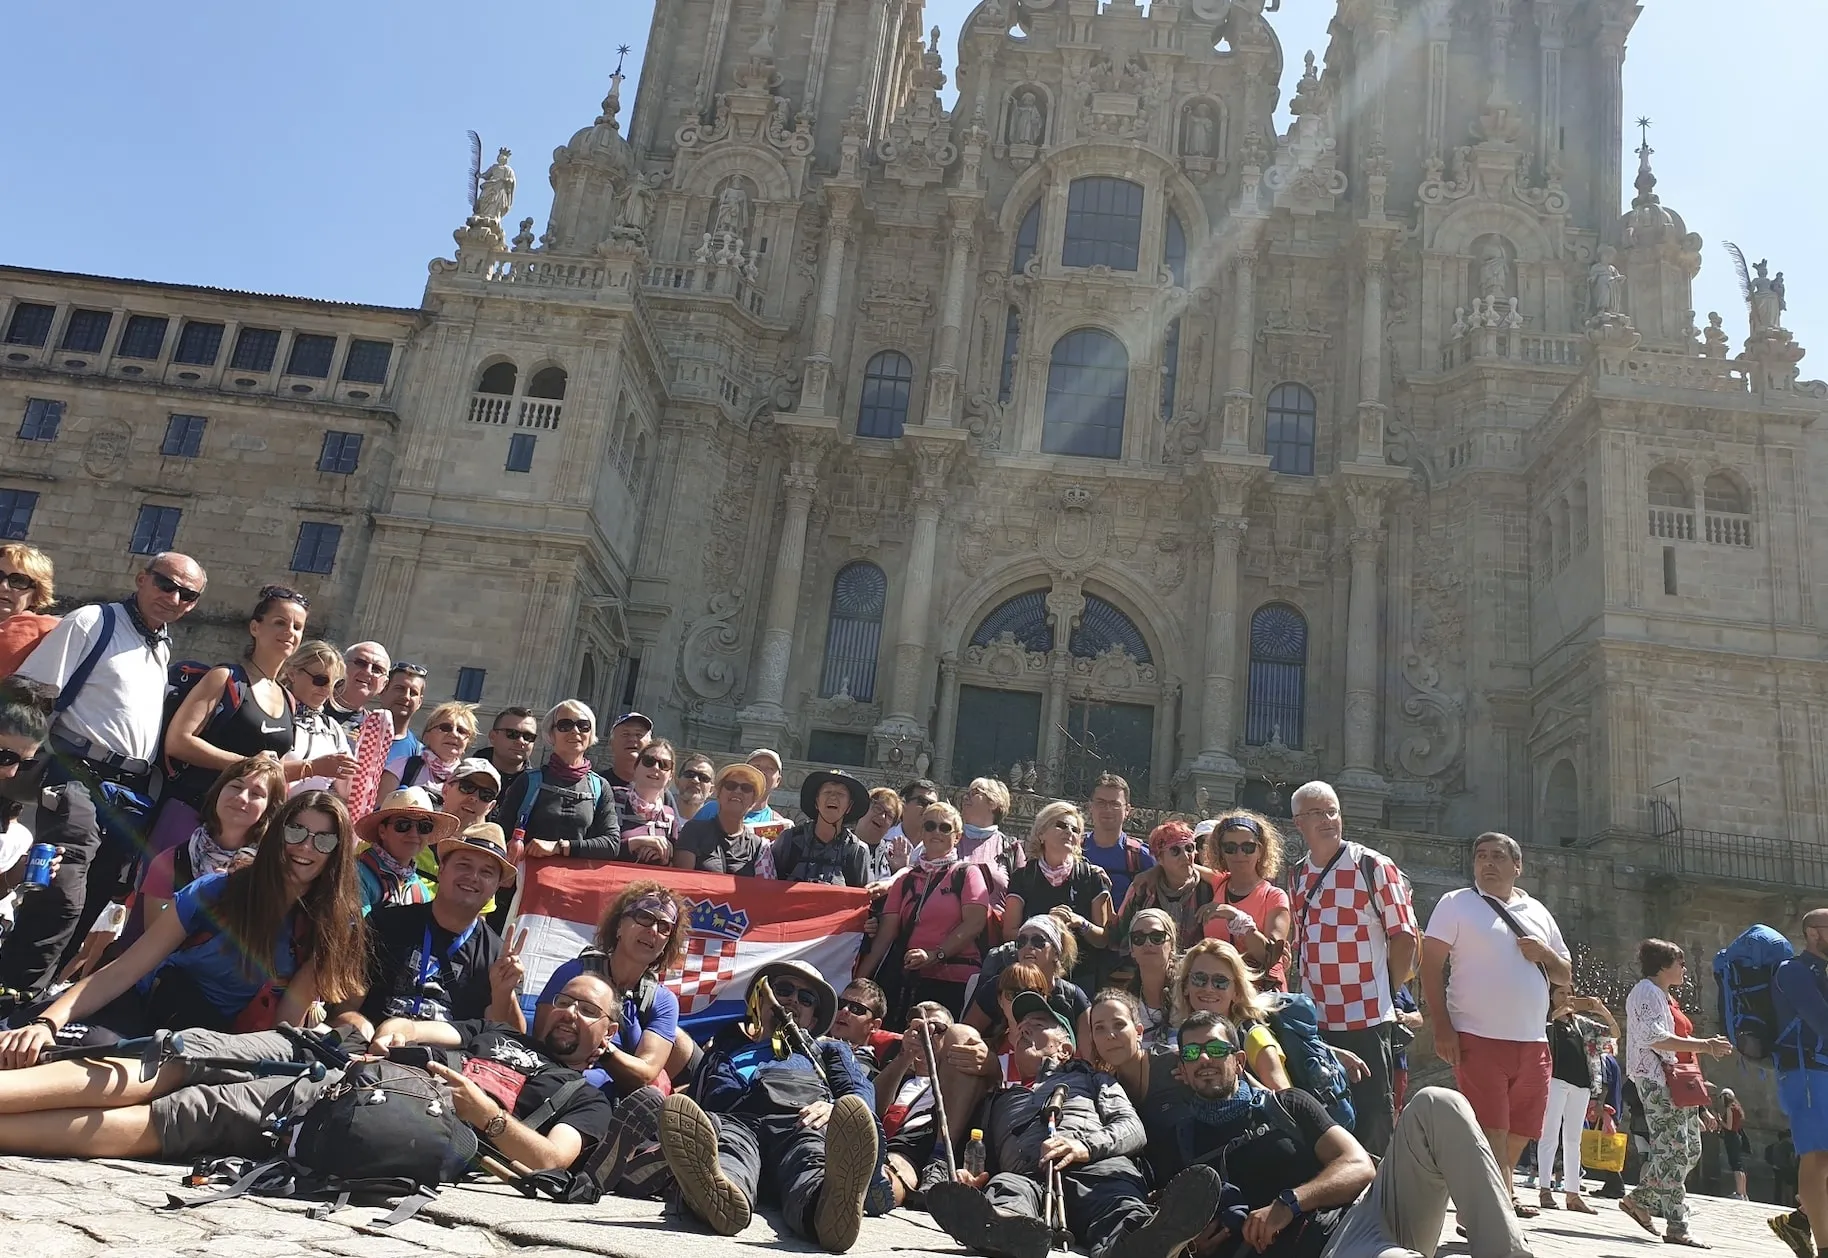 Group of Croatian pilgrims in front of the cathedral at Santiago de Compostela, Santiago de Compostela, Spain, August 2019. Photo credit: Confraternity of St. James - Croatia